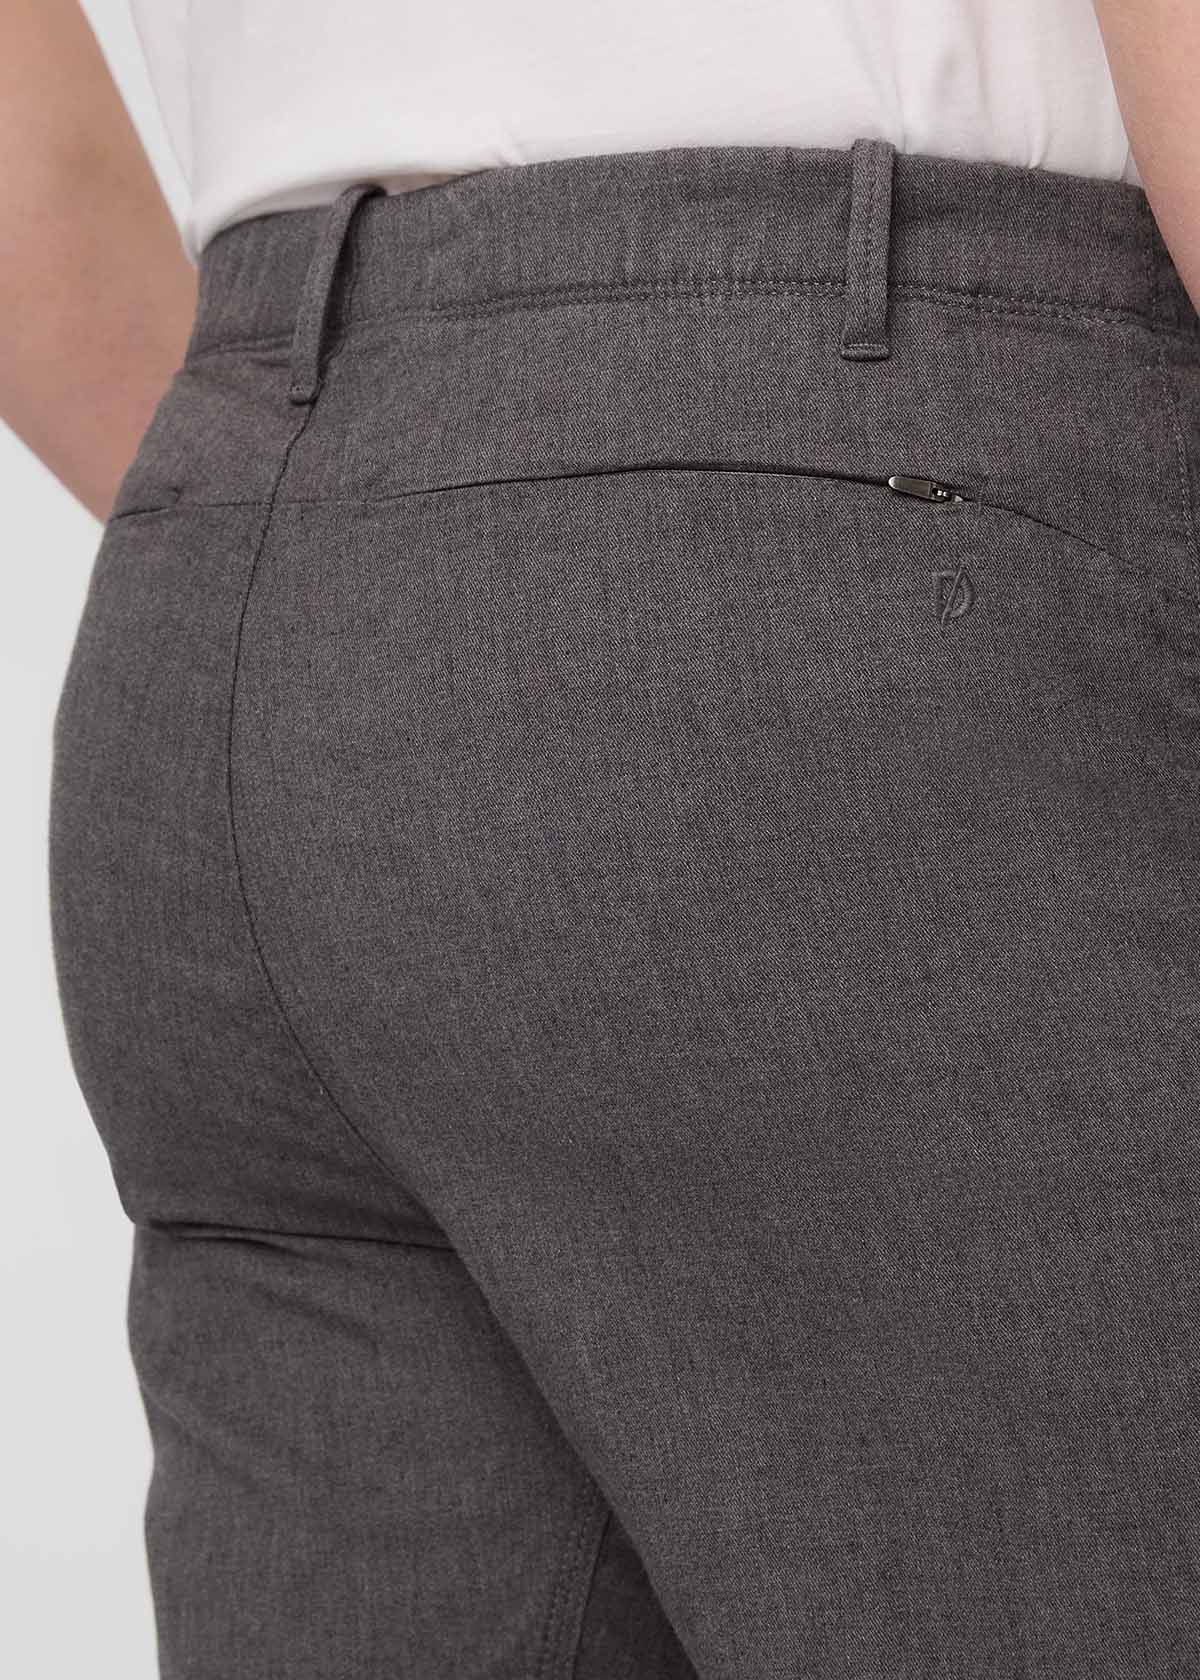 hoksml Cargo Pants For Men Multi-pocket Button Zipper Cargo Pants Sports  Outdoor Pants Trousers Clearance - Walmart.com